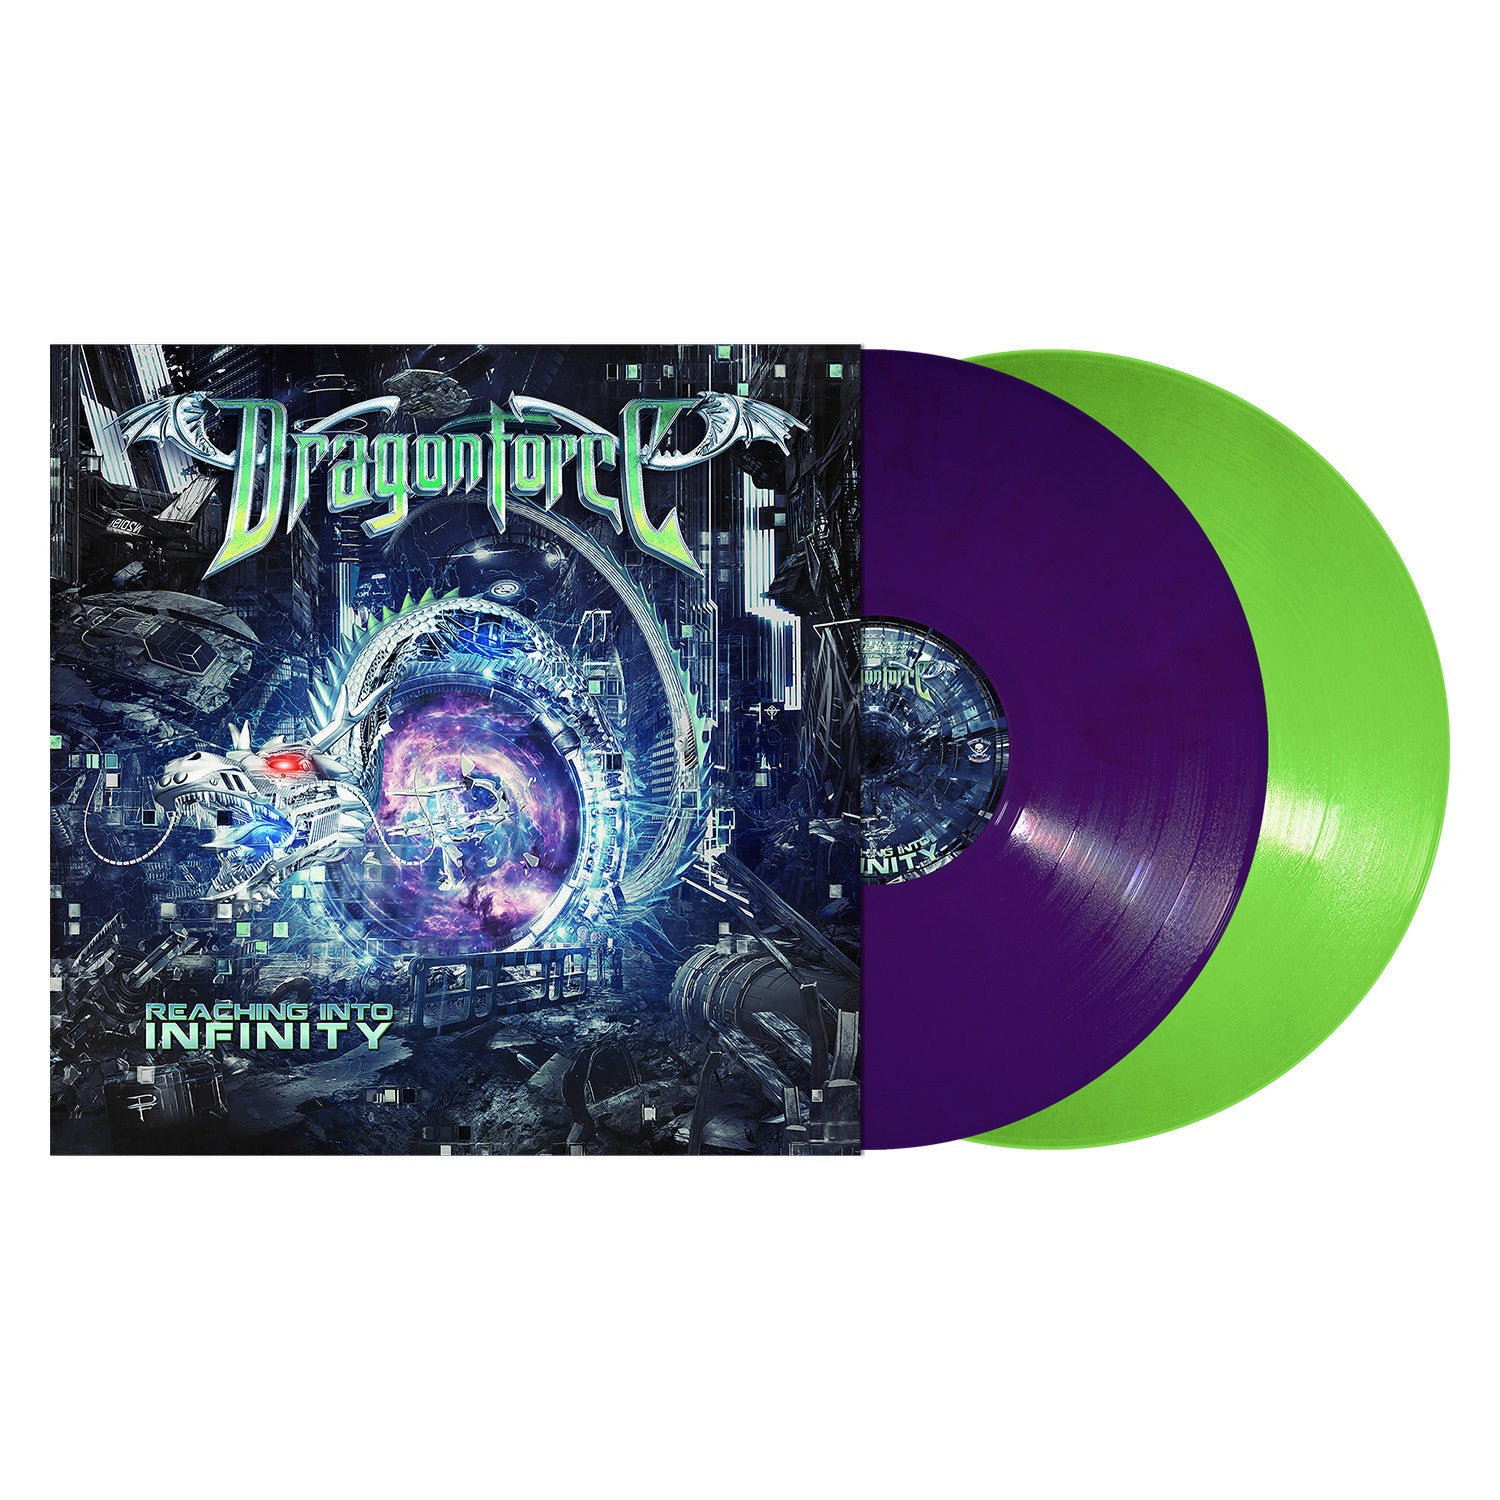 Dragonforce ‎– Reaching To Infinity - New Vinyl Record 2017 Metal Blade 2-LP Gatefold Pressing on Neon Green and Purple Vinyl - Power Metal